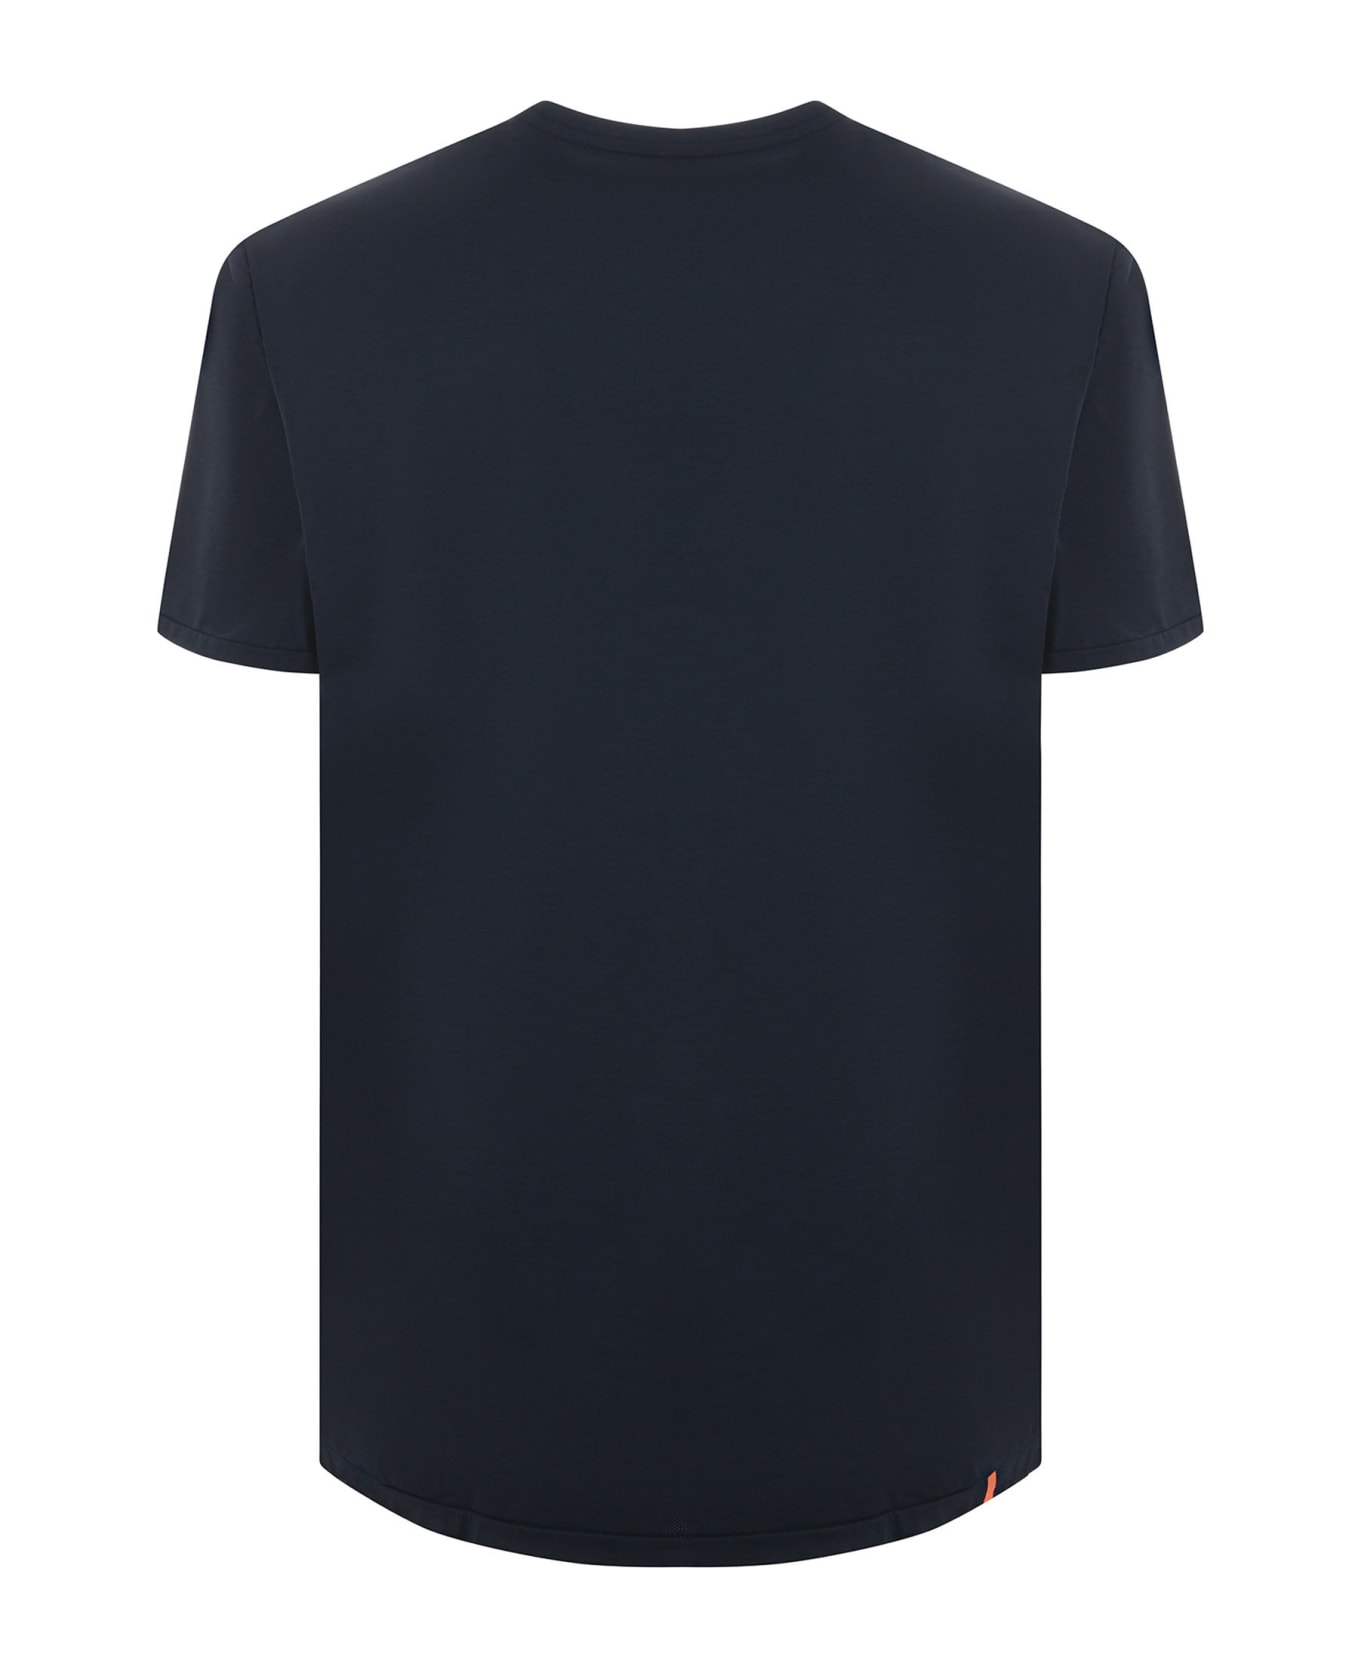 RRD - Roberto Ricci Design Rrd T-shirt - Blu scuro シャツ